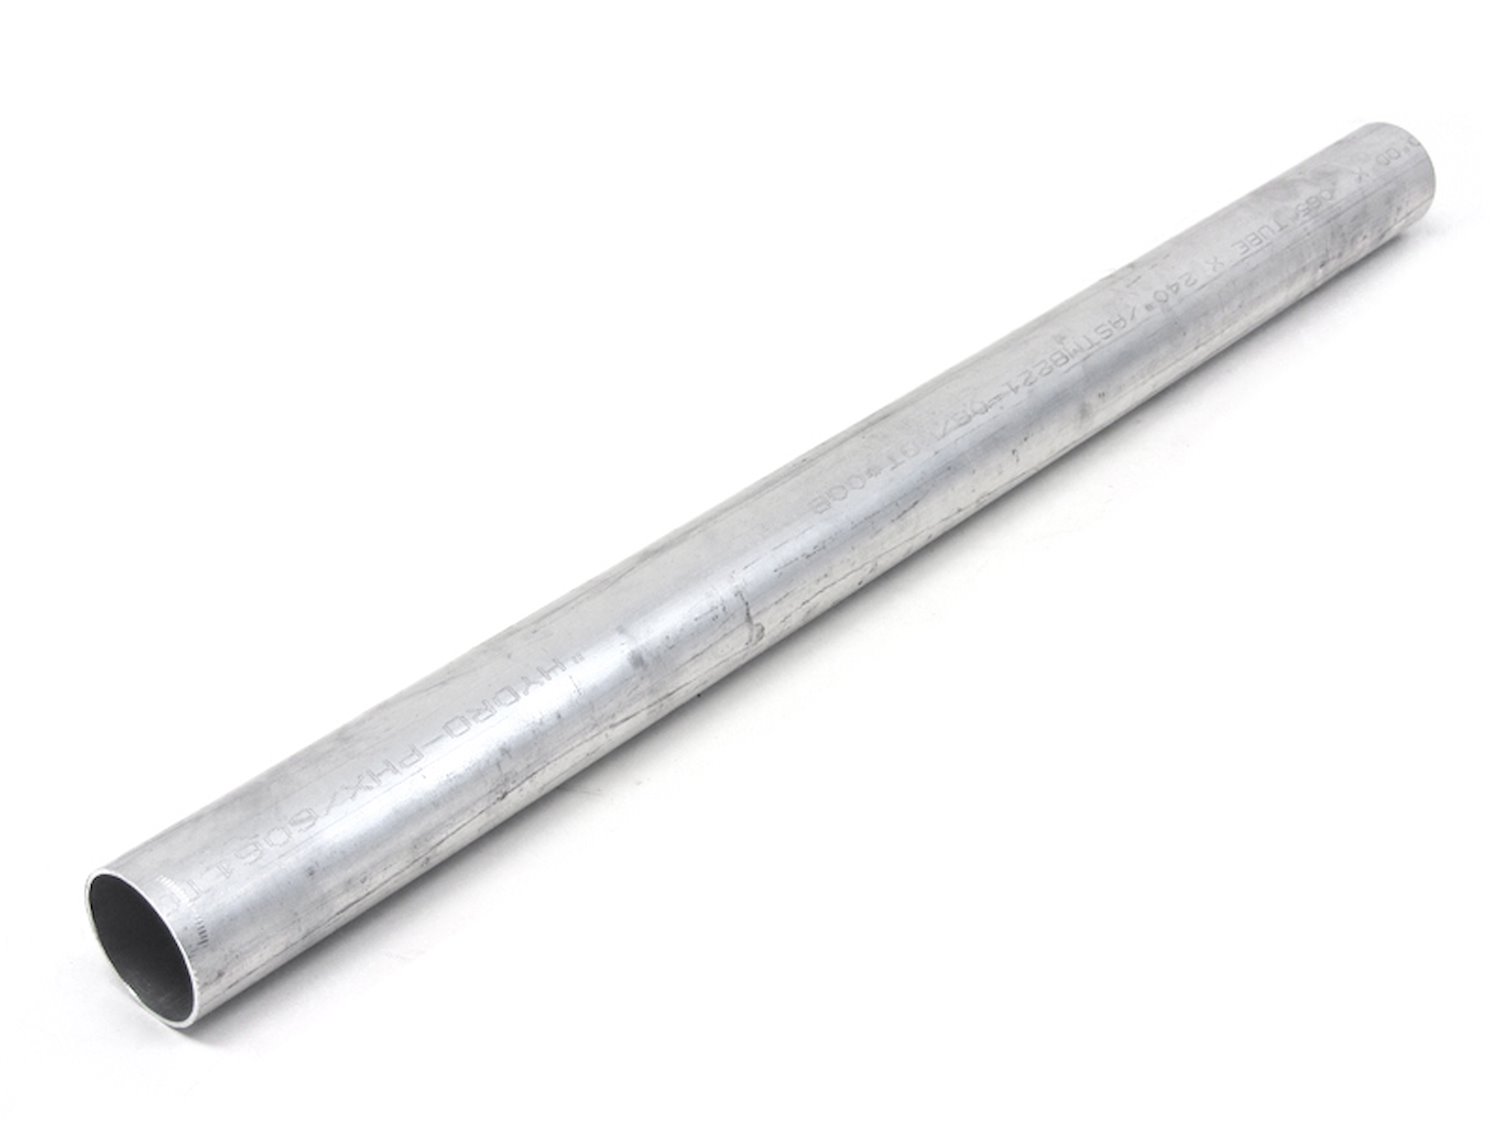 AST-275 Aluminum Tubing, 6061 Aluminum, Straight Tubing, 2-3/4 in. OD, Seamless, Raw Finish, 1 ft. Long